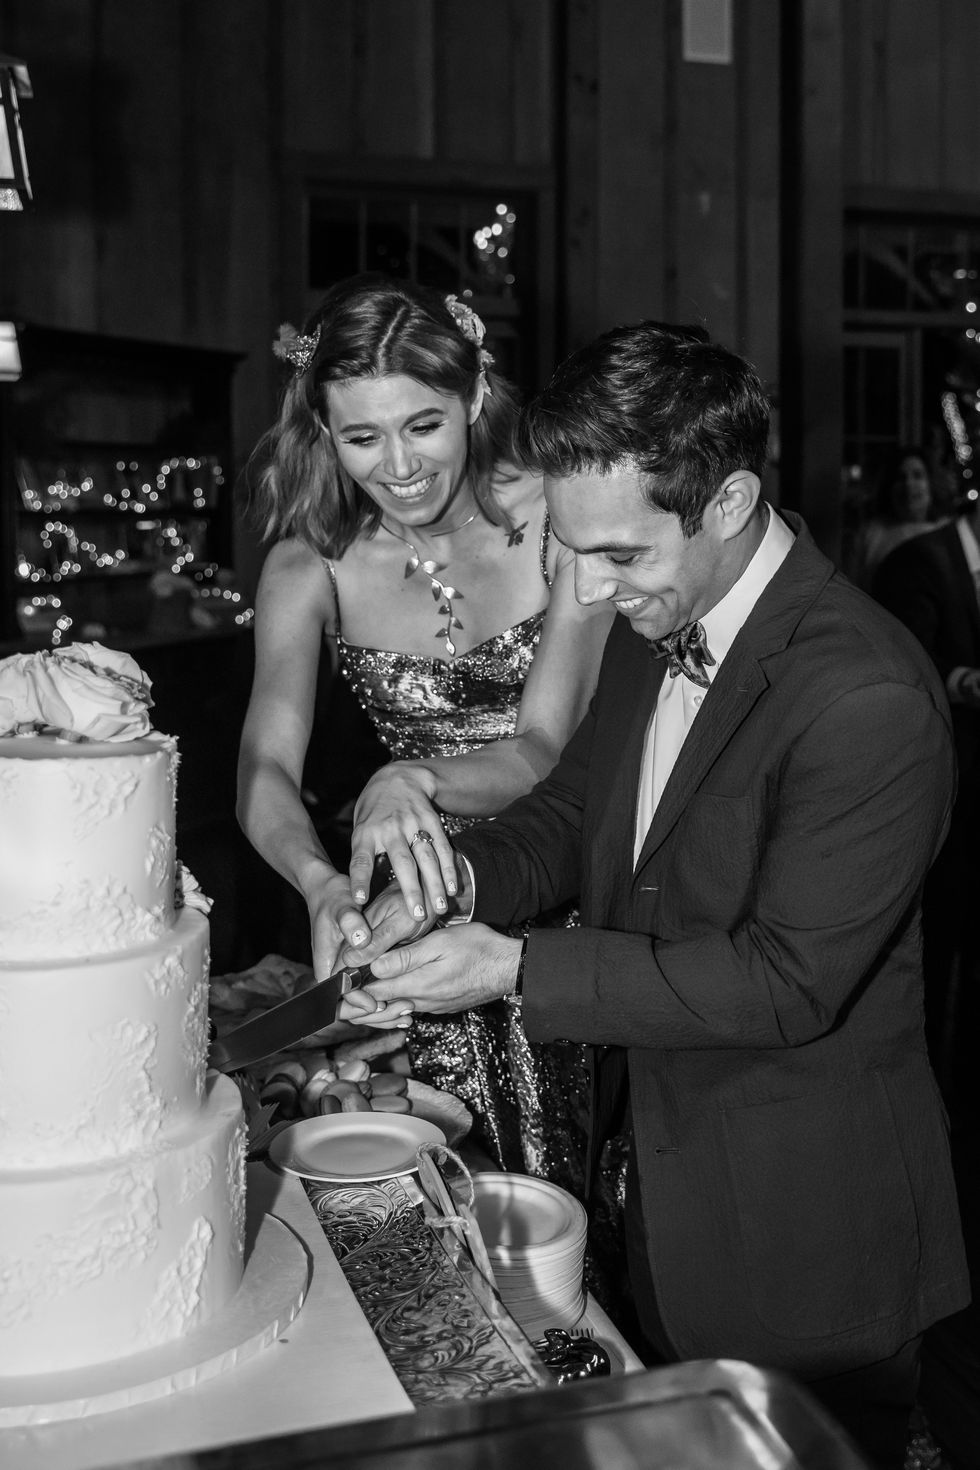 a bride and groom cutting a wedding cake